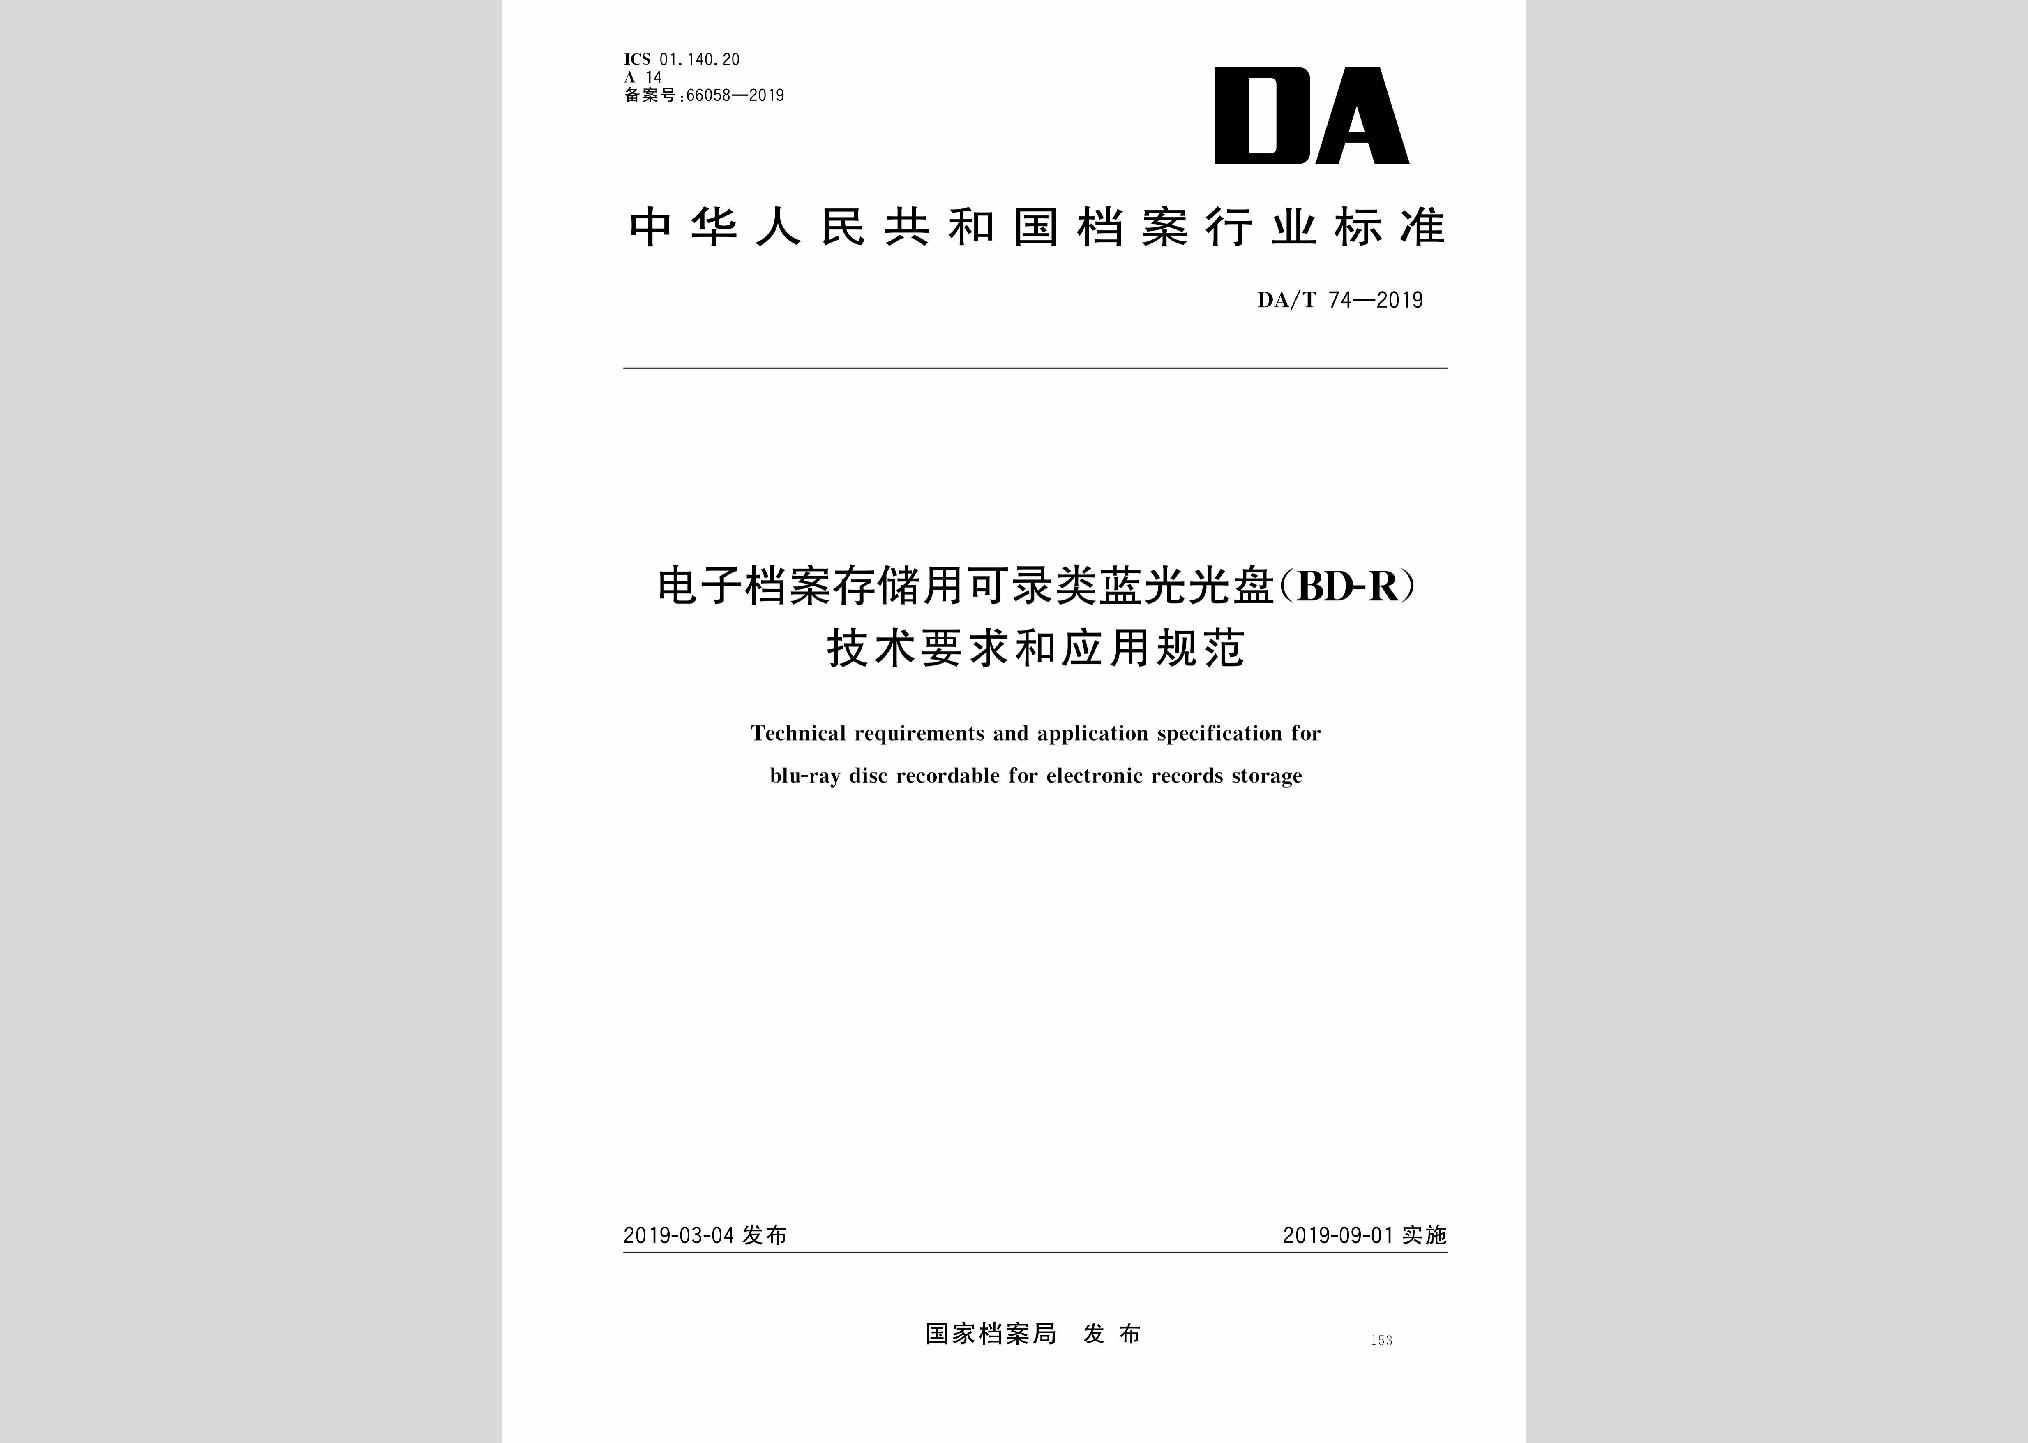 DA/T74-2019：电子档案存储用可录类蓝光光盘（BD-R）技术要求和应用规范